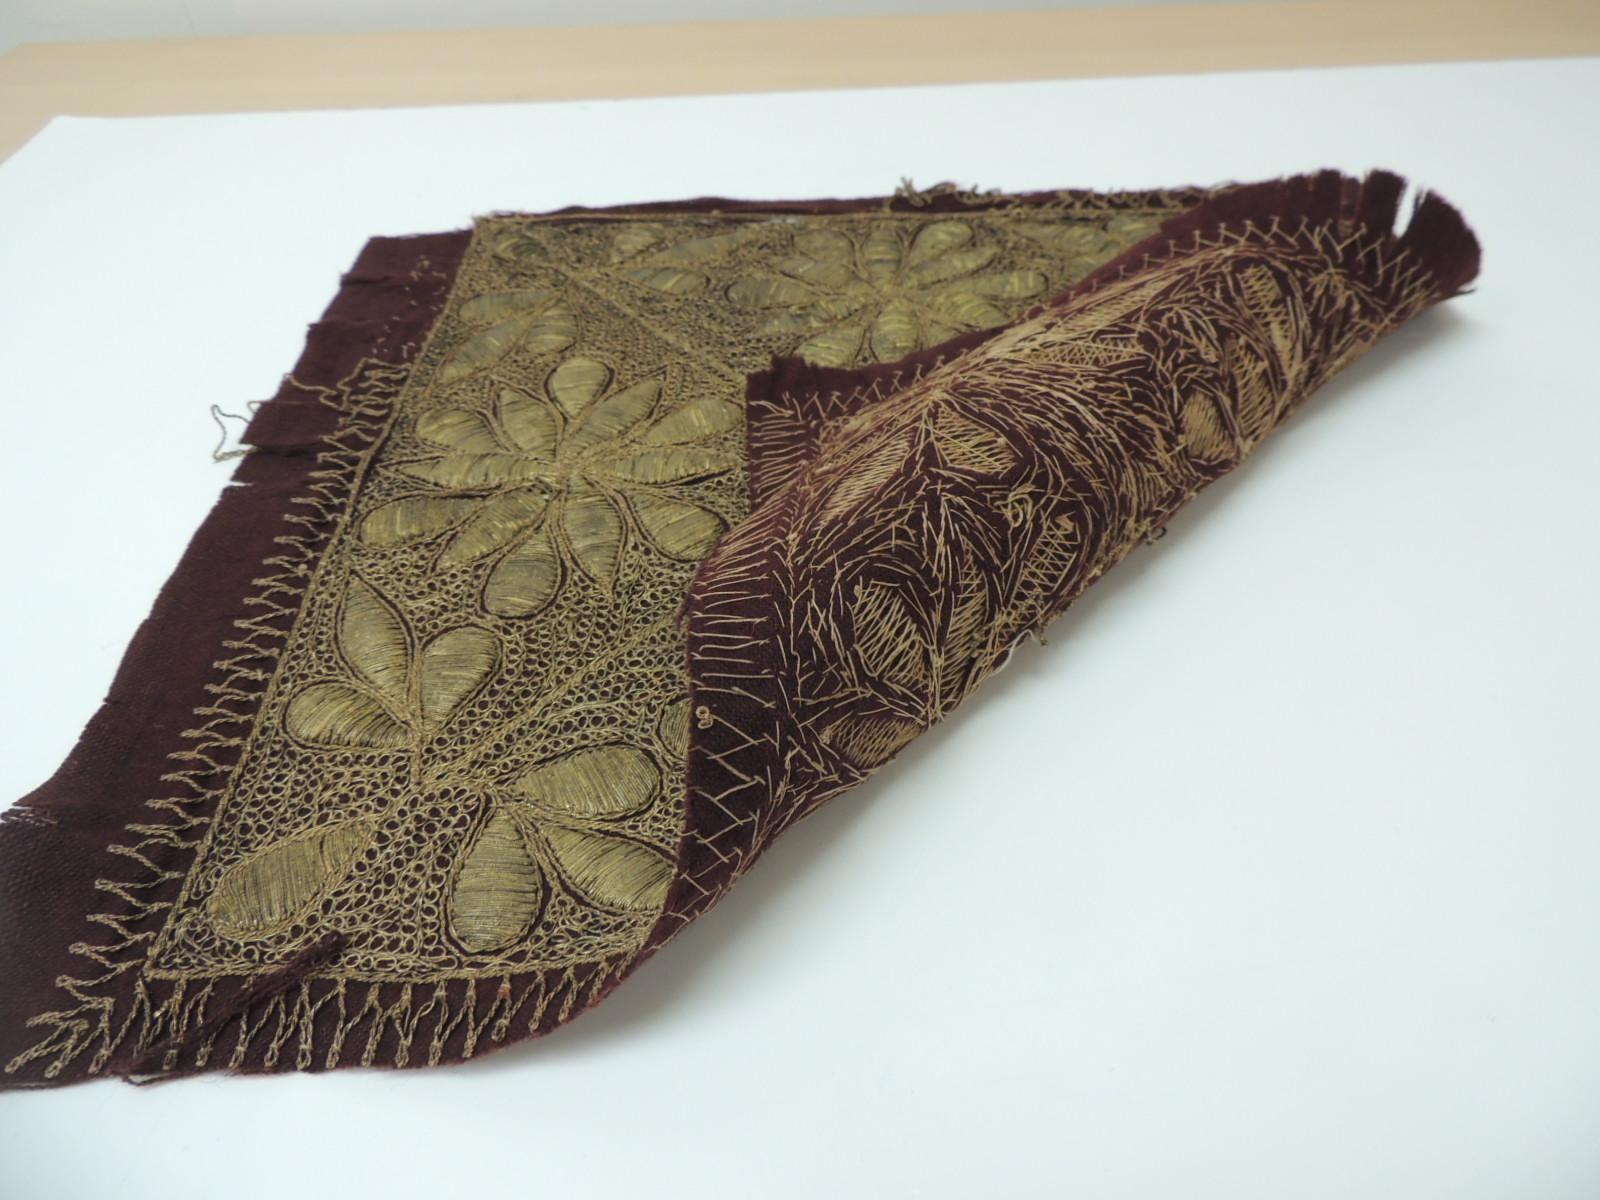 Armenian 19th Century Persian Ottoman Empire Gold Metallic Threads Embroidered Textile